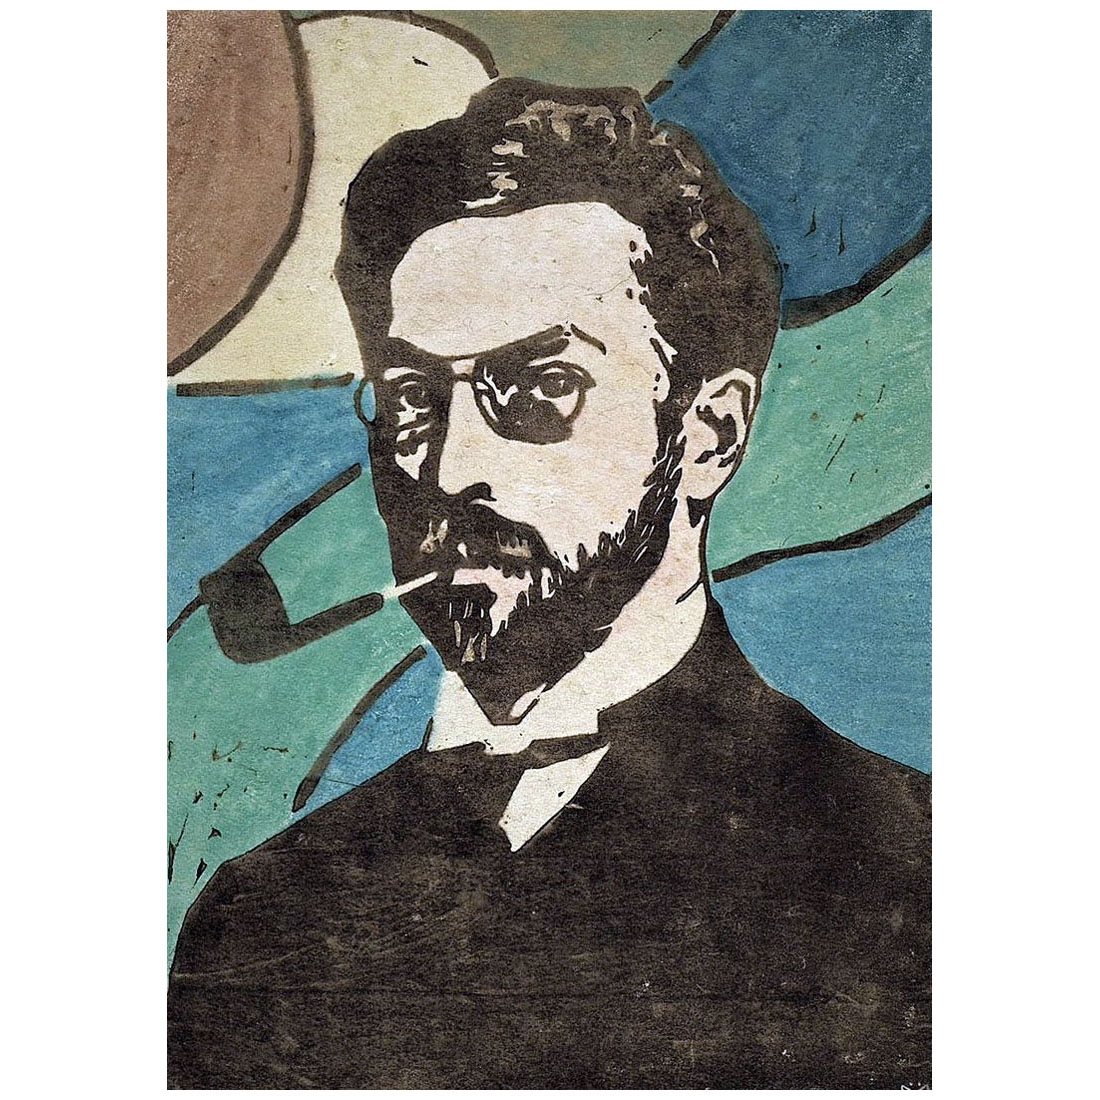 Gabriele Munter. Portrait of Wassily Kandinsky. 1906. Lenbachhaus, Munchen